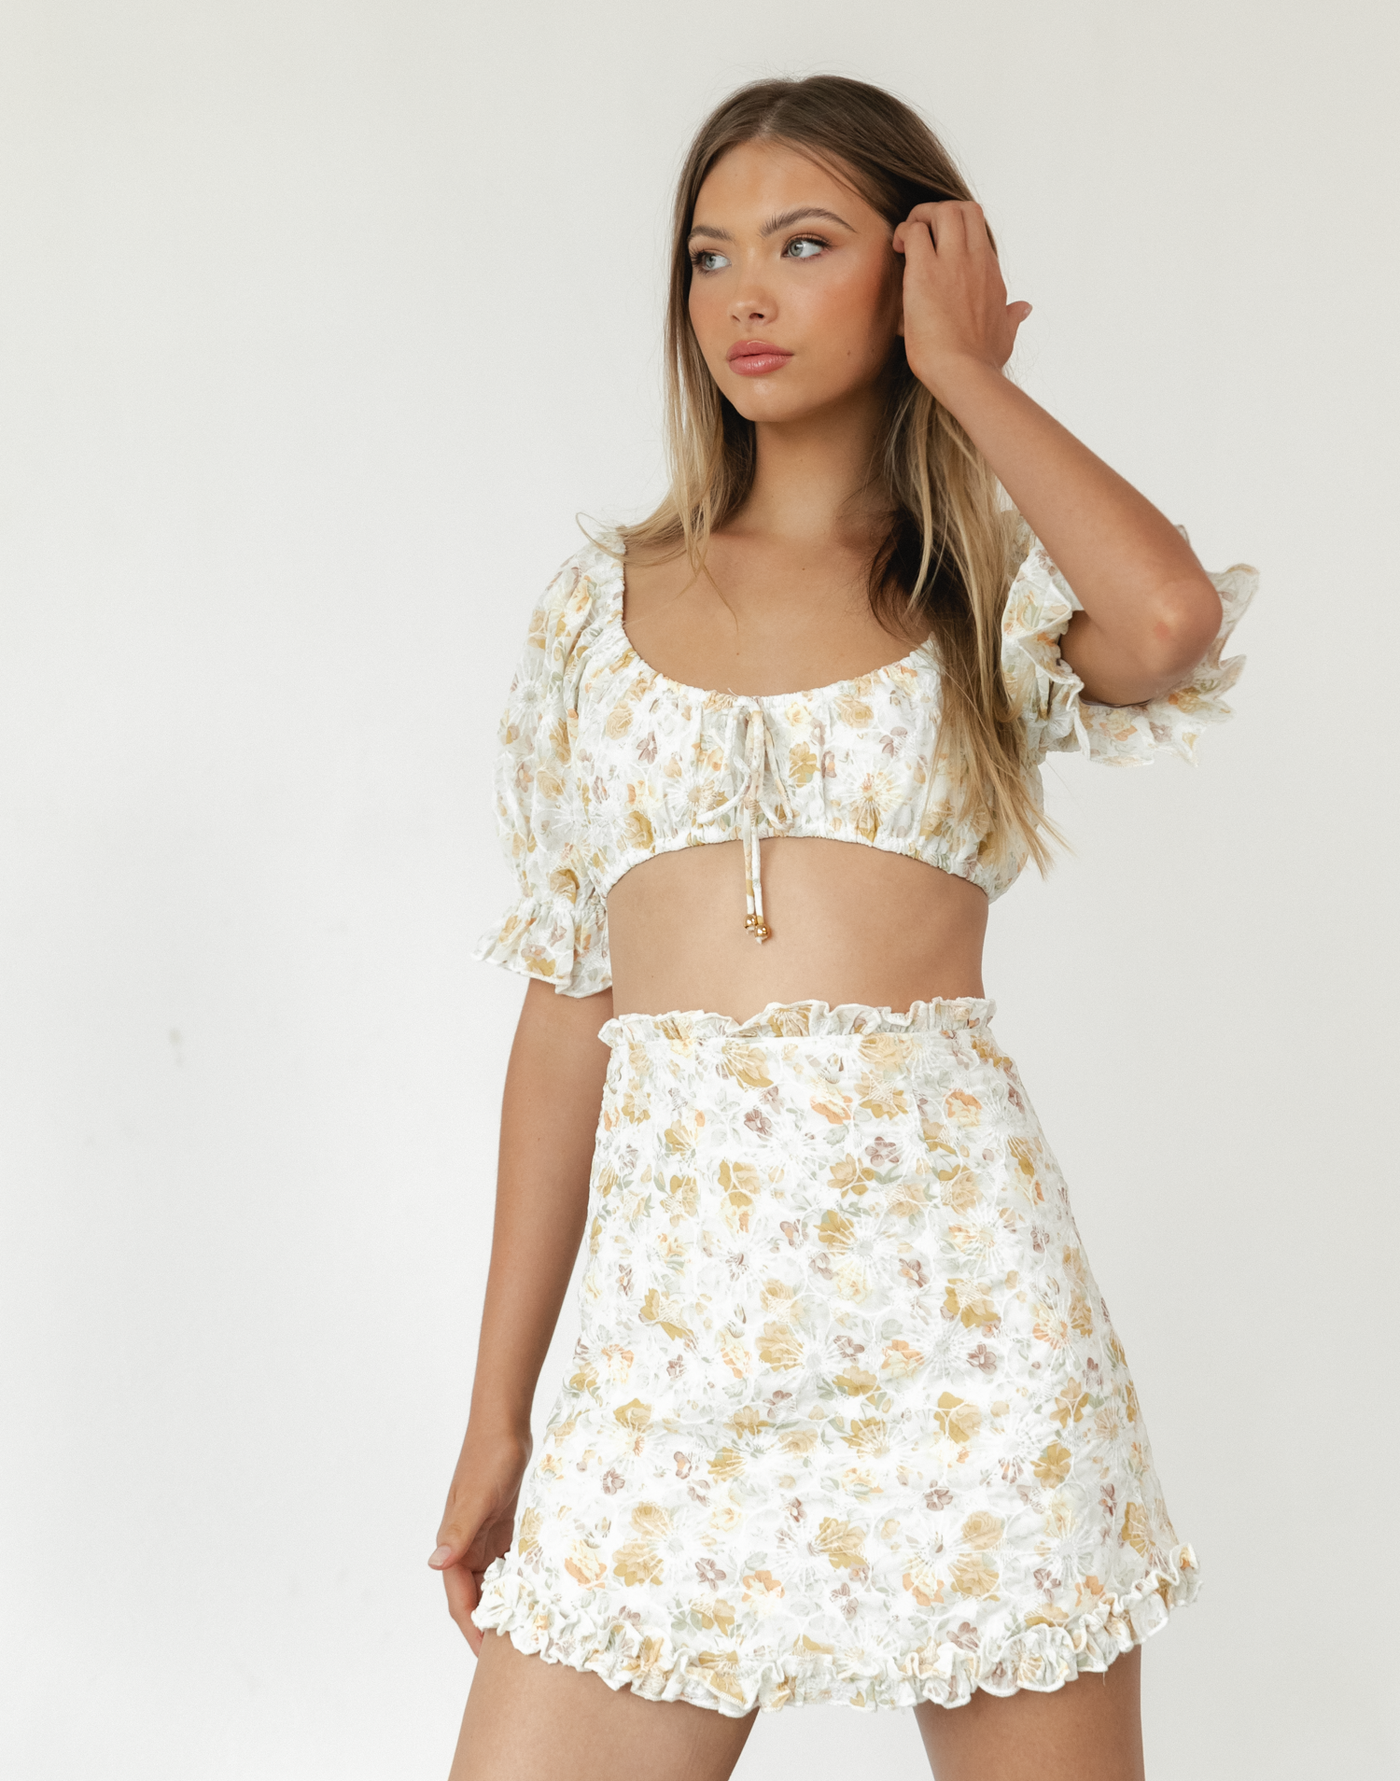 Malany Mini Skirt (Floral Print) - Floral Mini Skirt - Women's Skirts - Charcoal Clothing